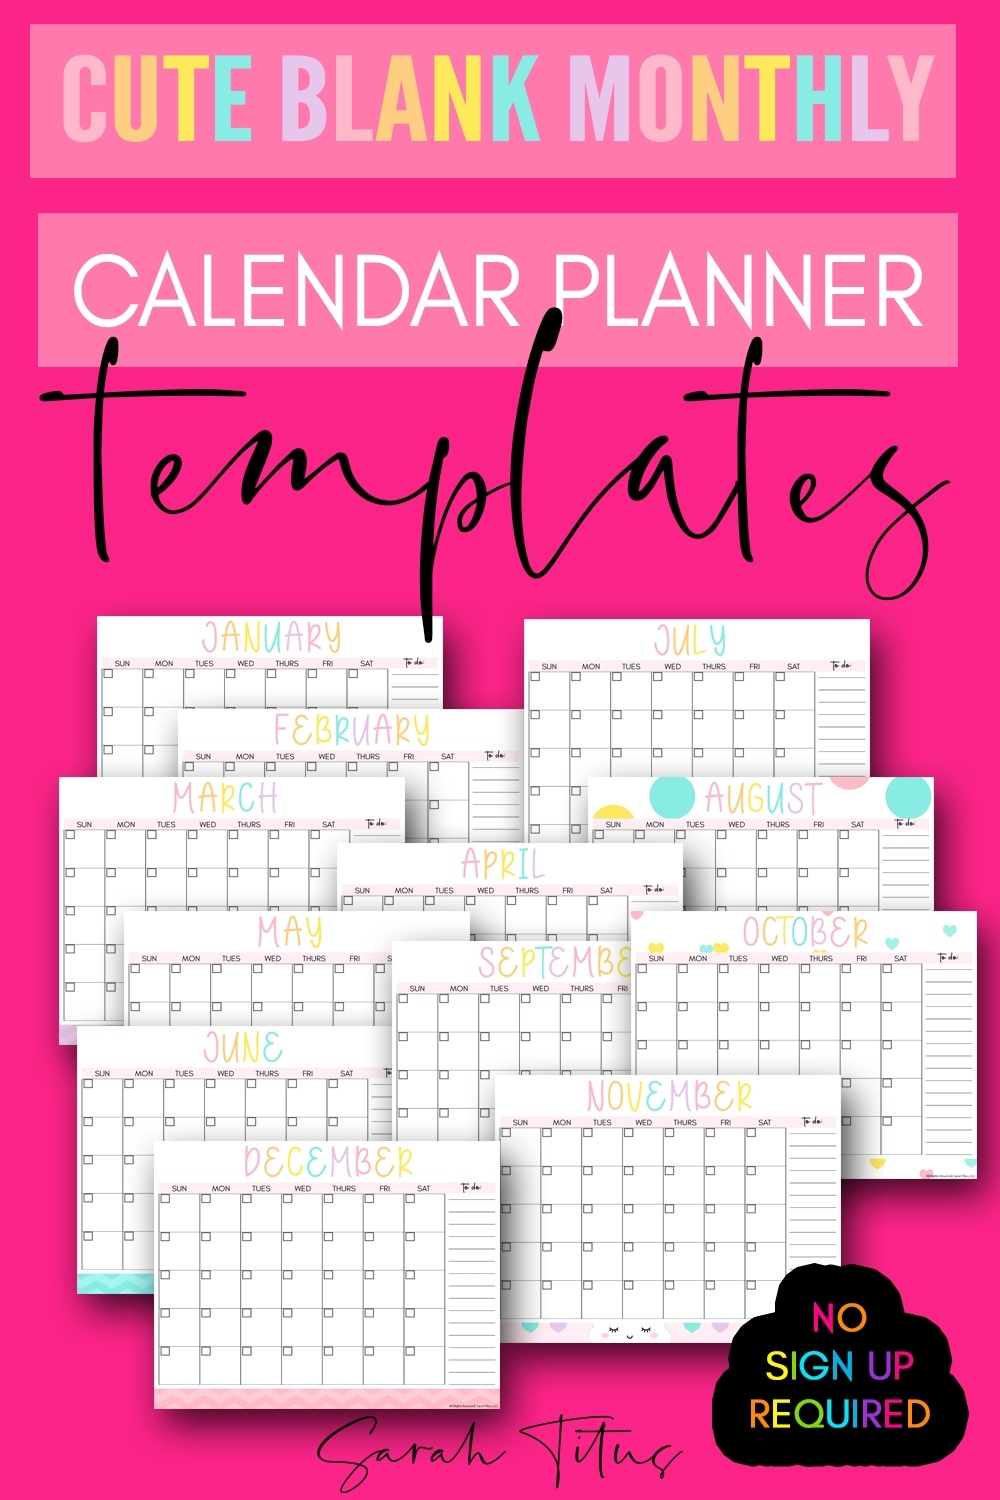 Cute Blank Monthly Calendar Planner Templates - Sarah Titus Calendar Template With Lines